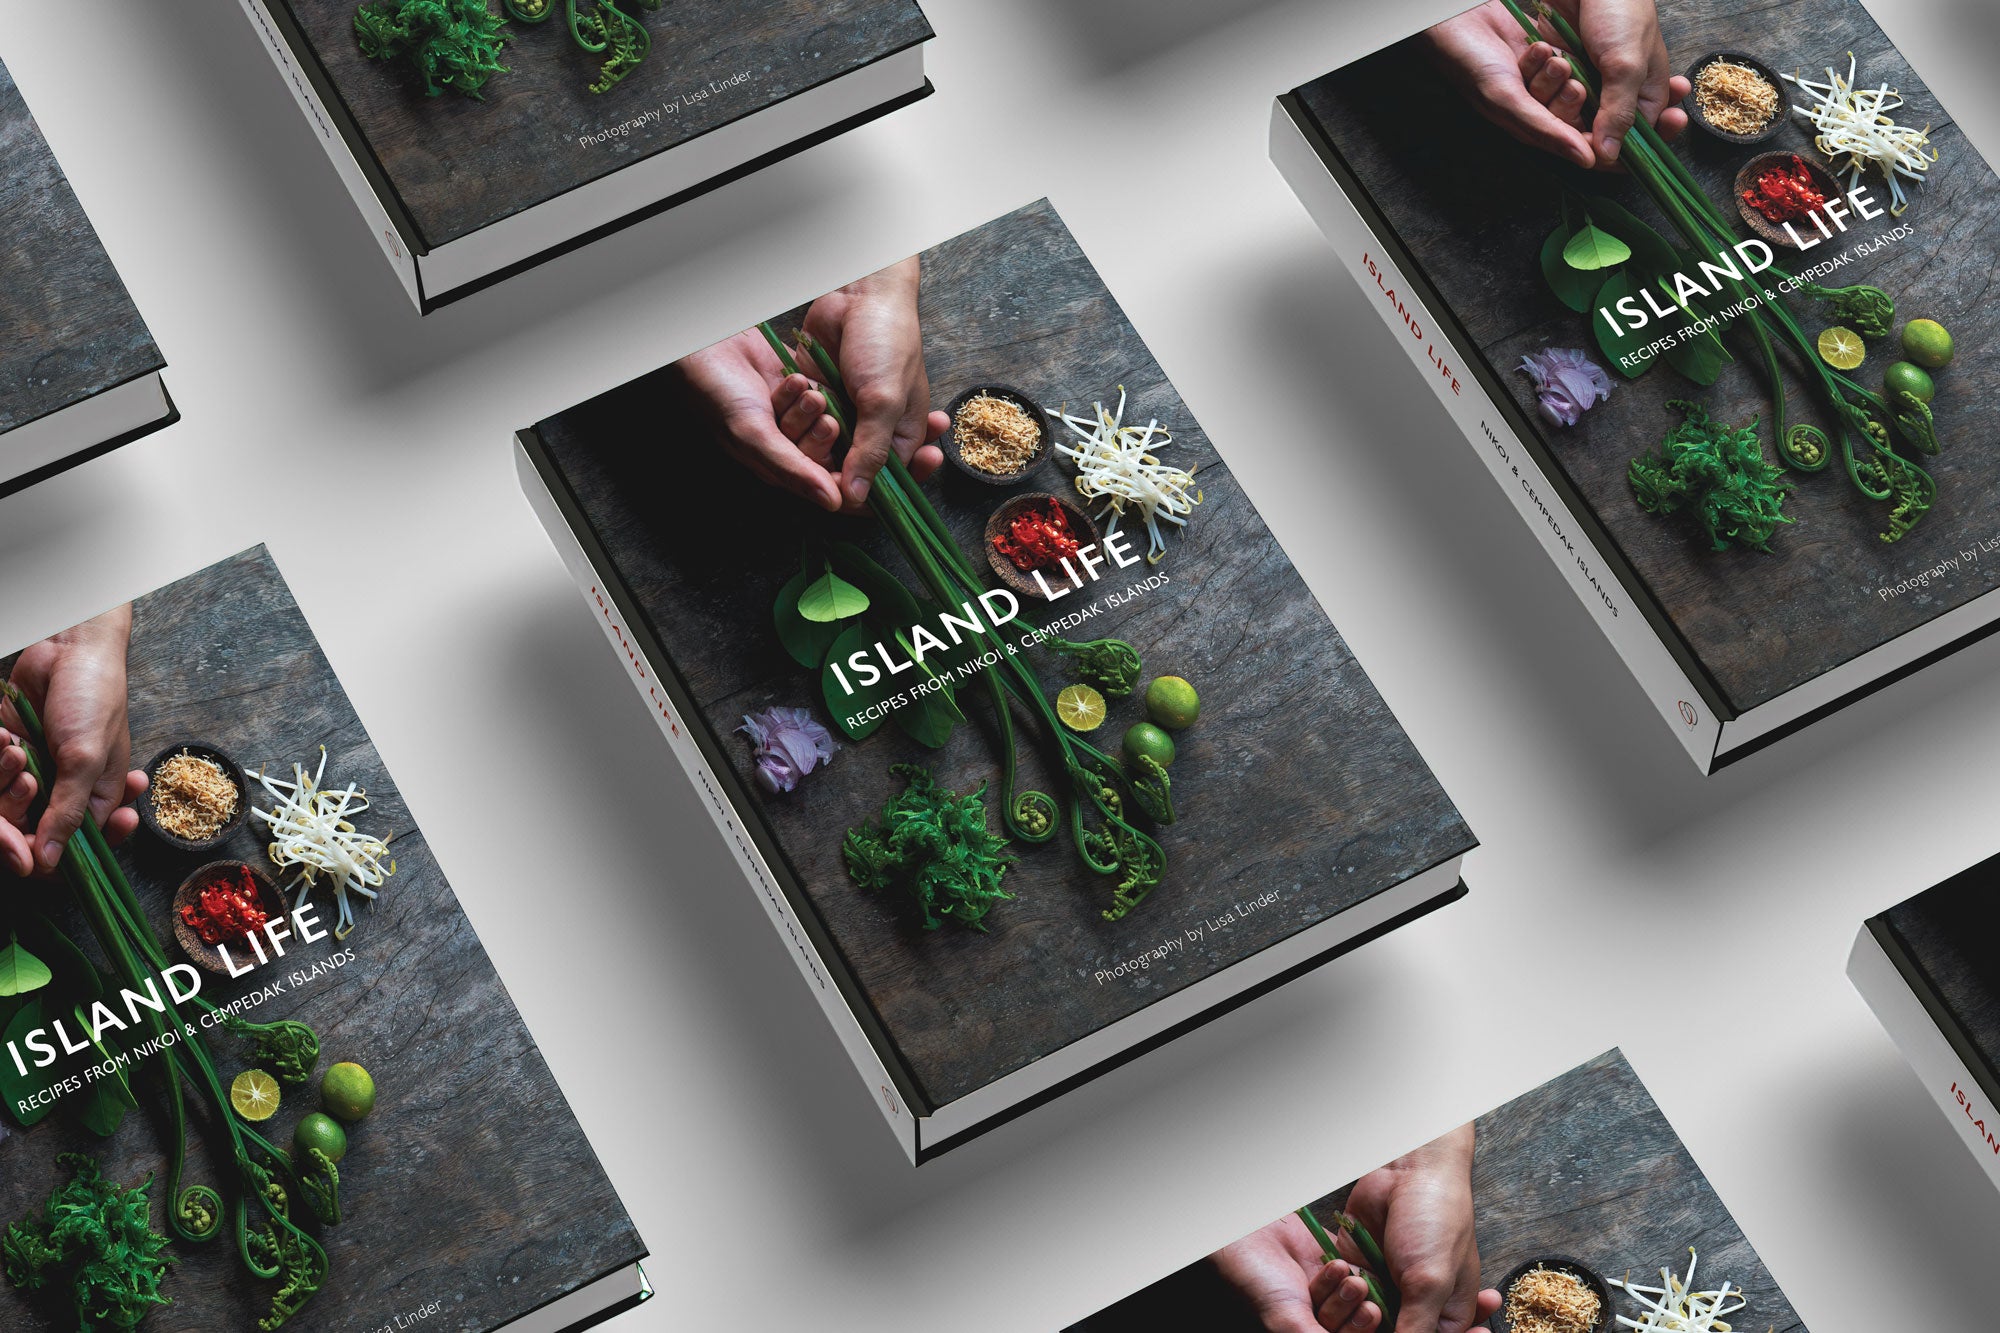 [PRE-ORDER] Island Life: Recipes from Nikoi & Cempedak Islands